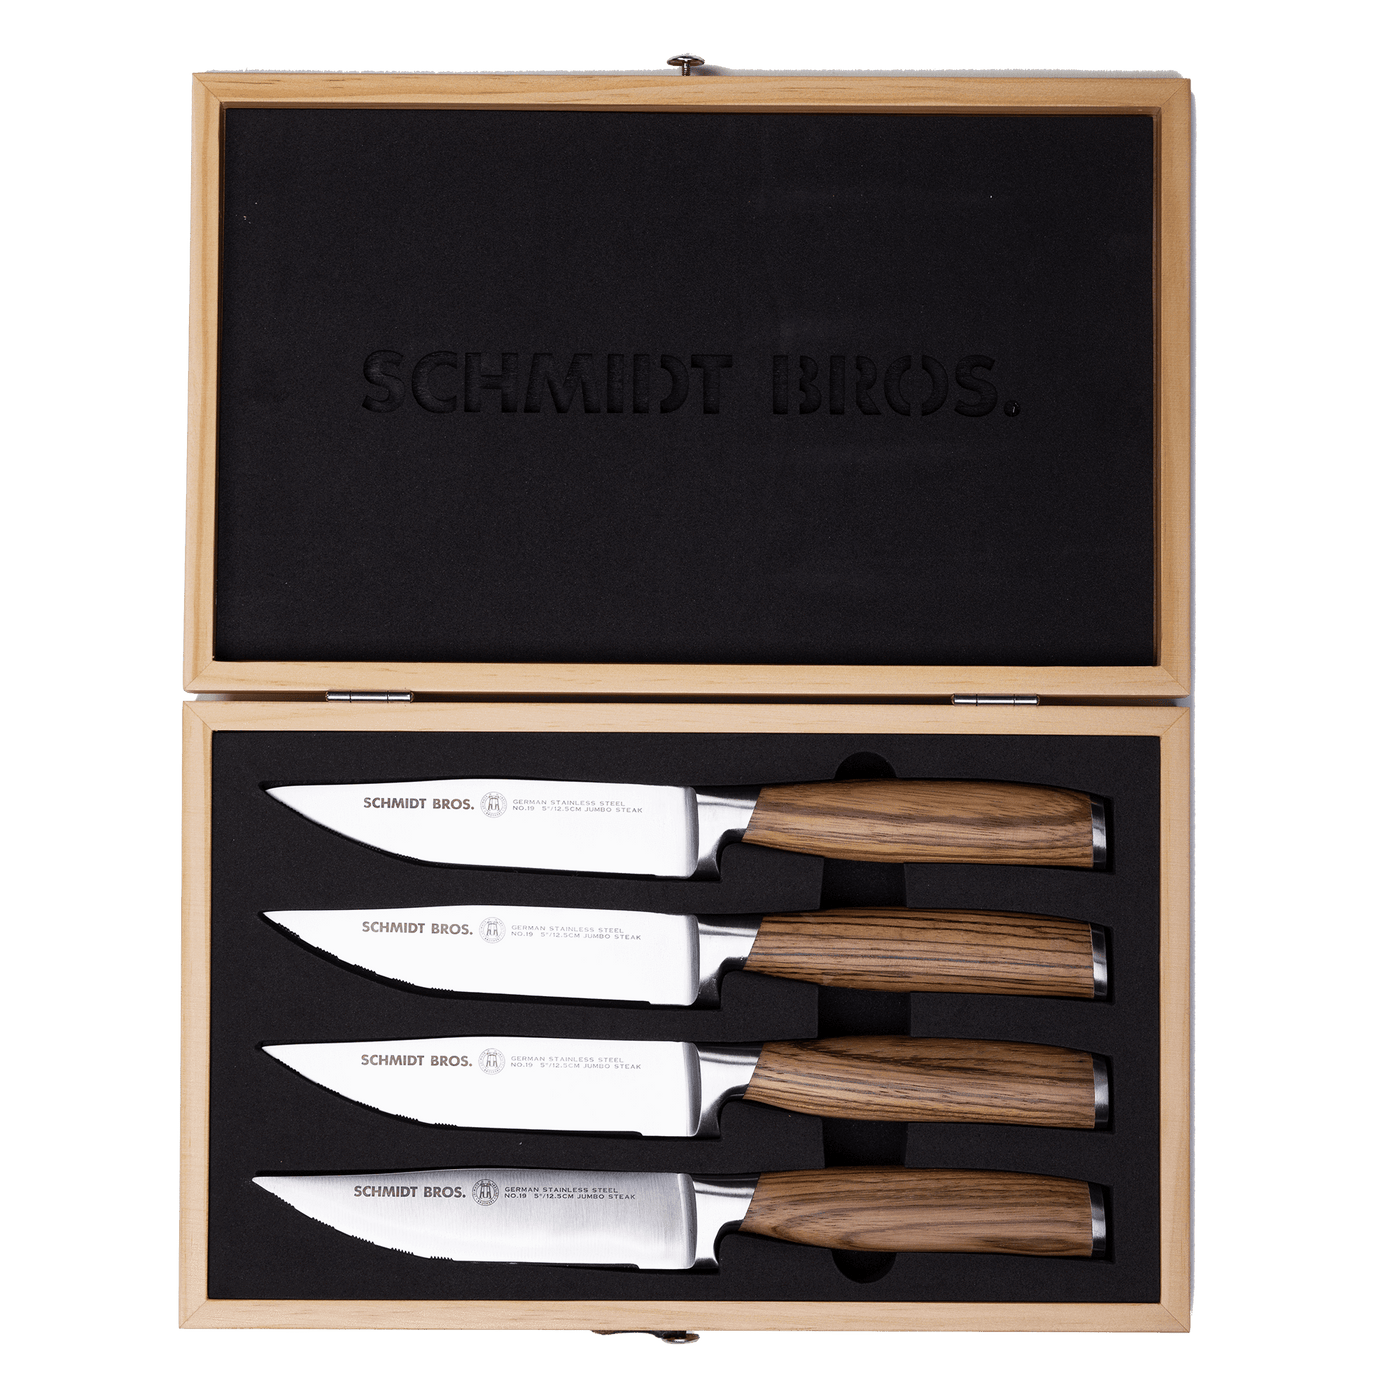 David Shaw Silverware Brooklyn 4 Piece Stainless Steel Steak Knife Set &  Reviews